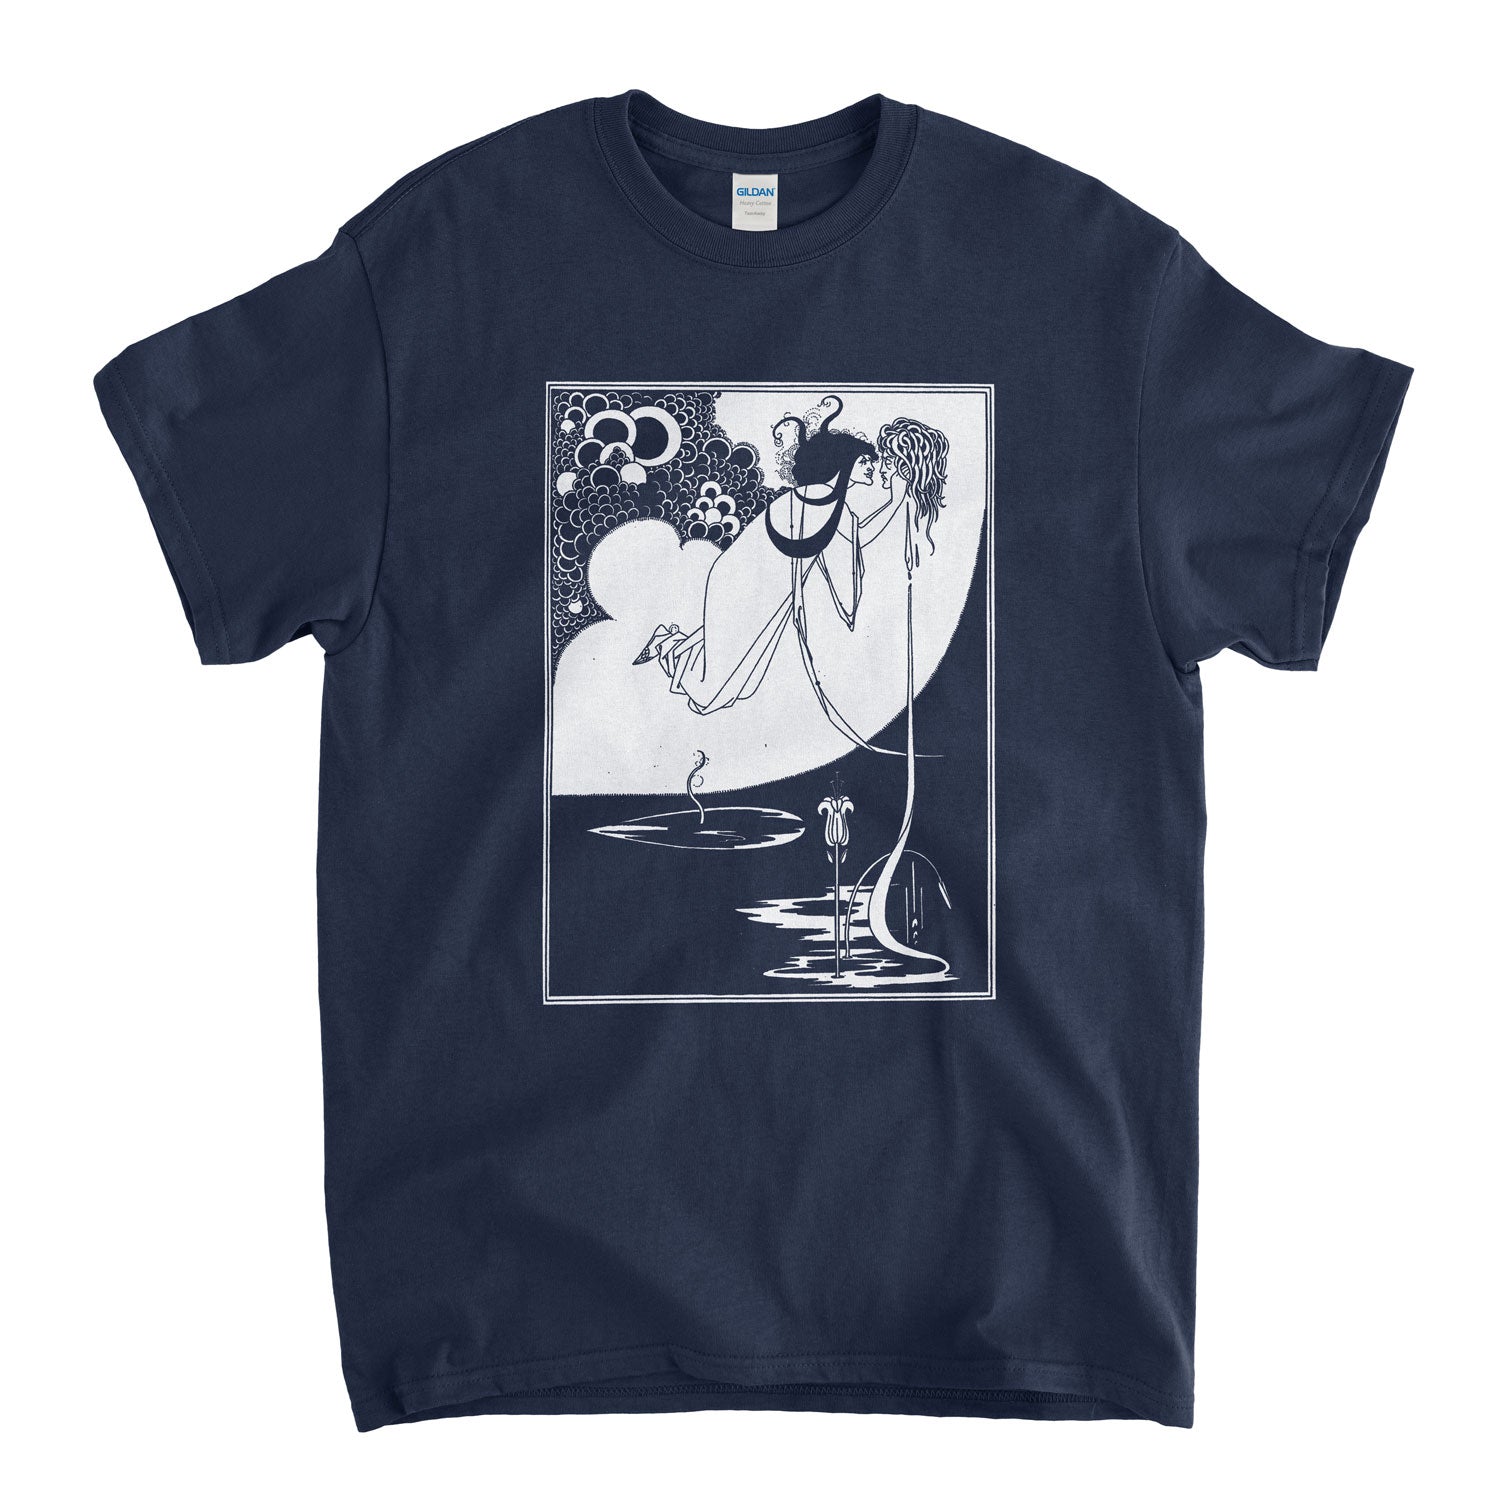 Aubrey Beardsley T Shirt - The Climax Classic Illustration Oscar Wilde